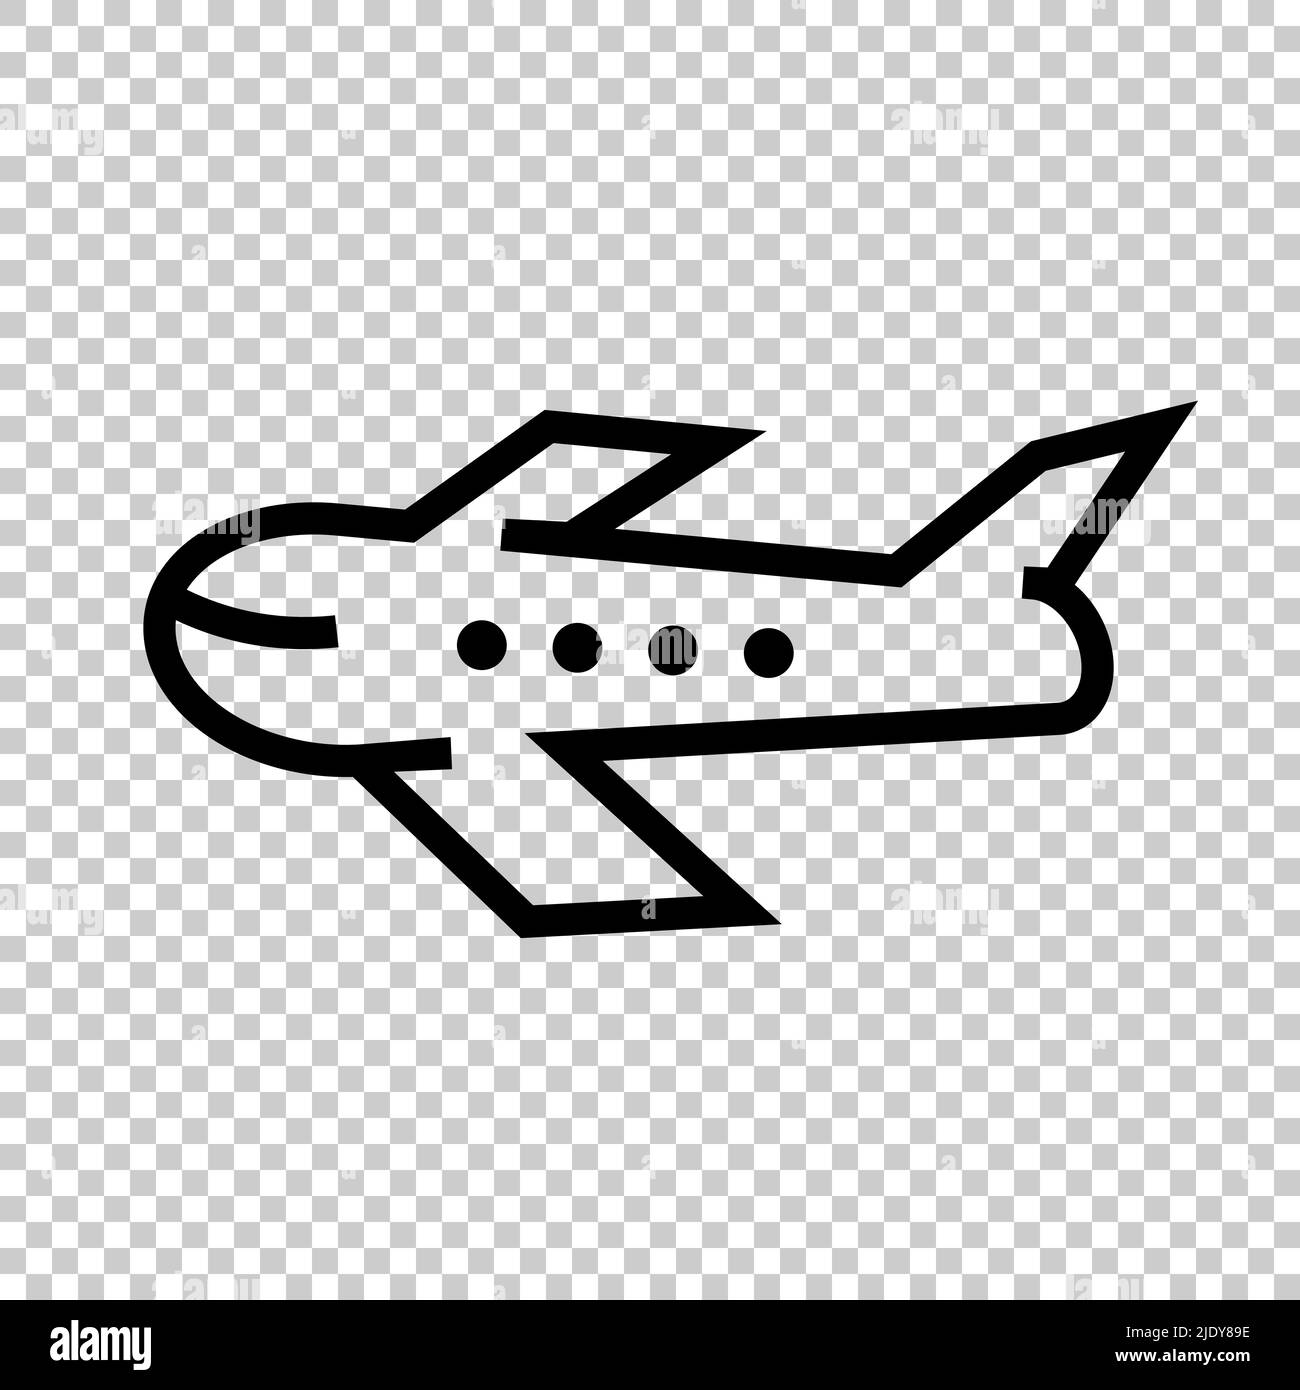 Flugzeugsymbol im Flug isoliert auf transparentem Hintergrund. Bearbeitbarer Vektor. Stock Vektor